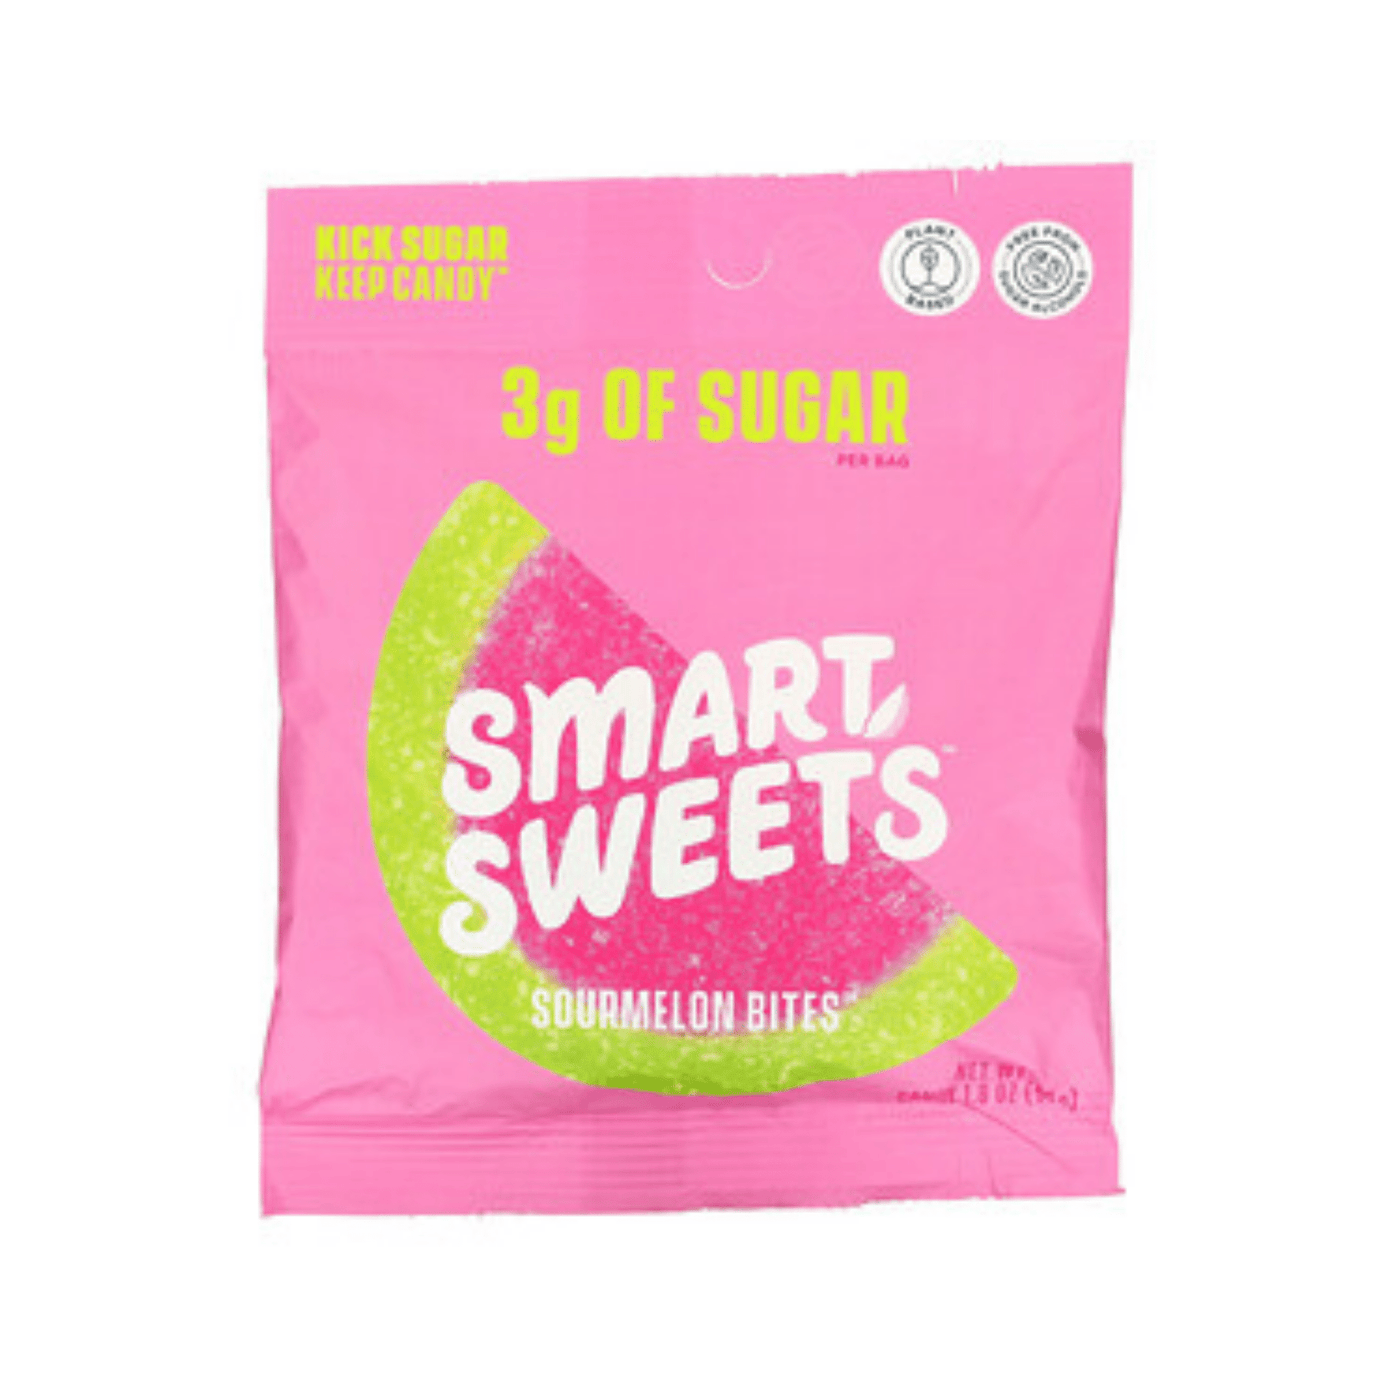 Smart Sweets Épicerie Sourmelon Smart Sweets Sugar Free